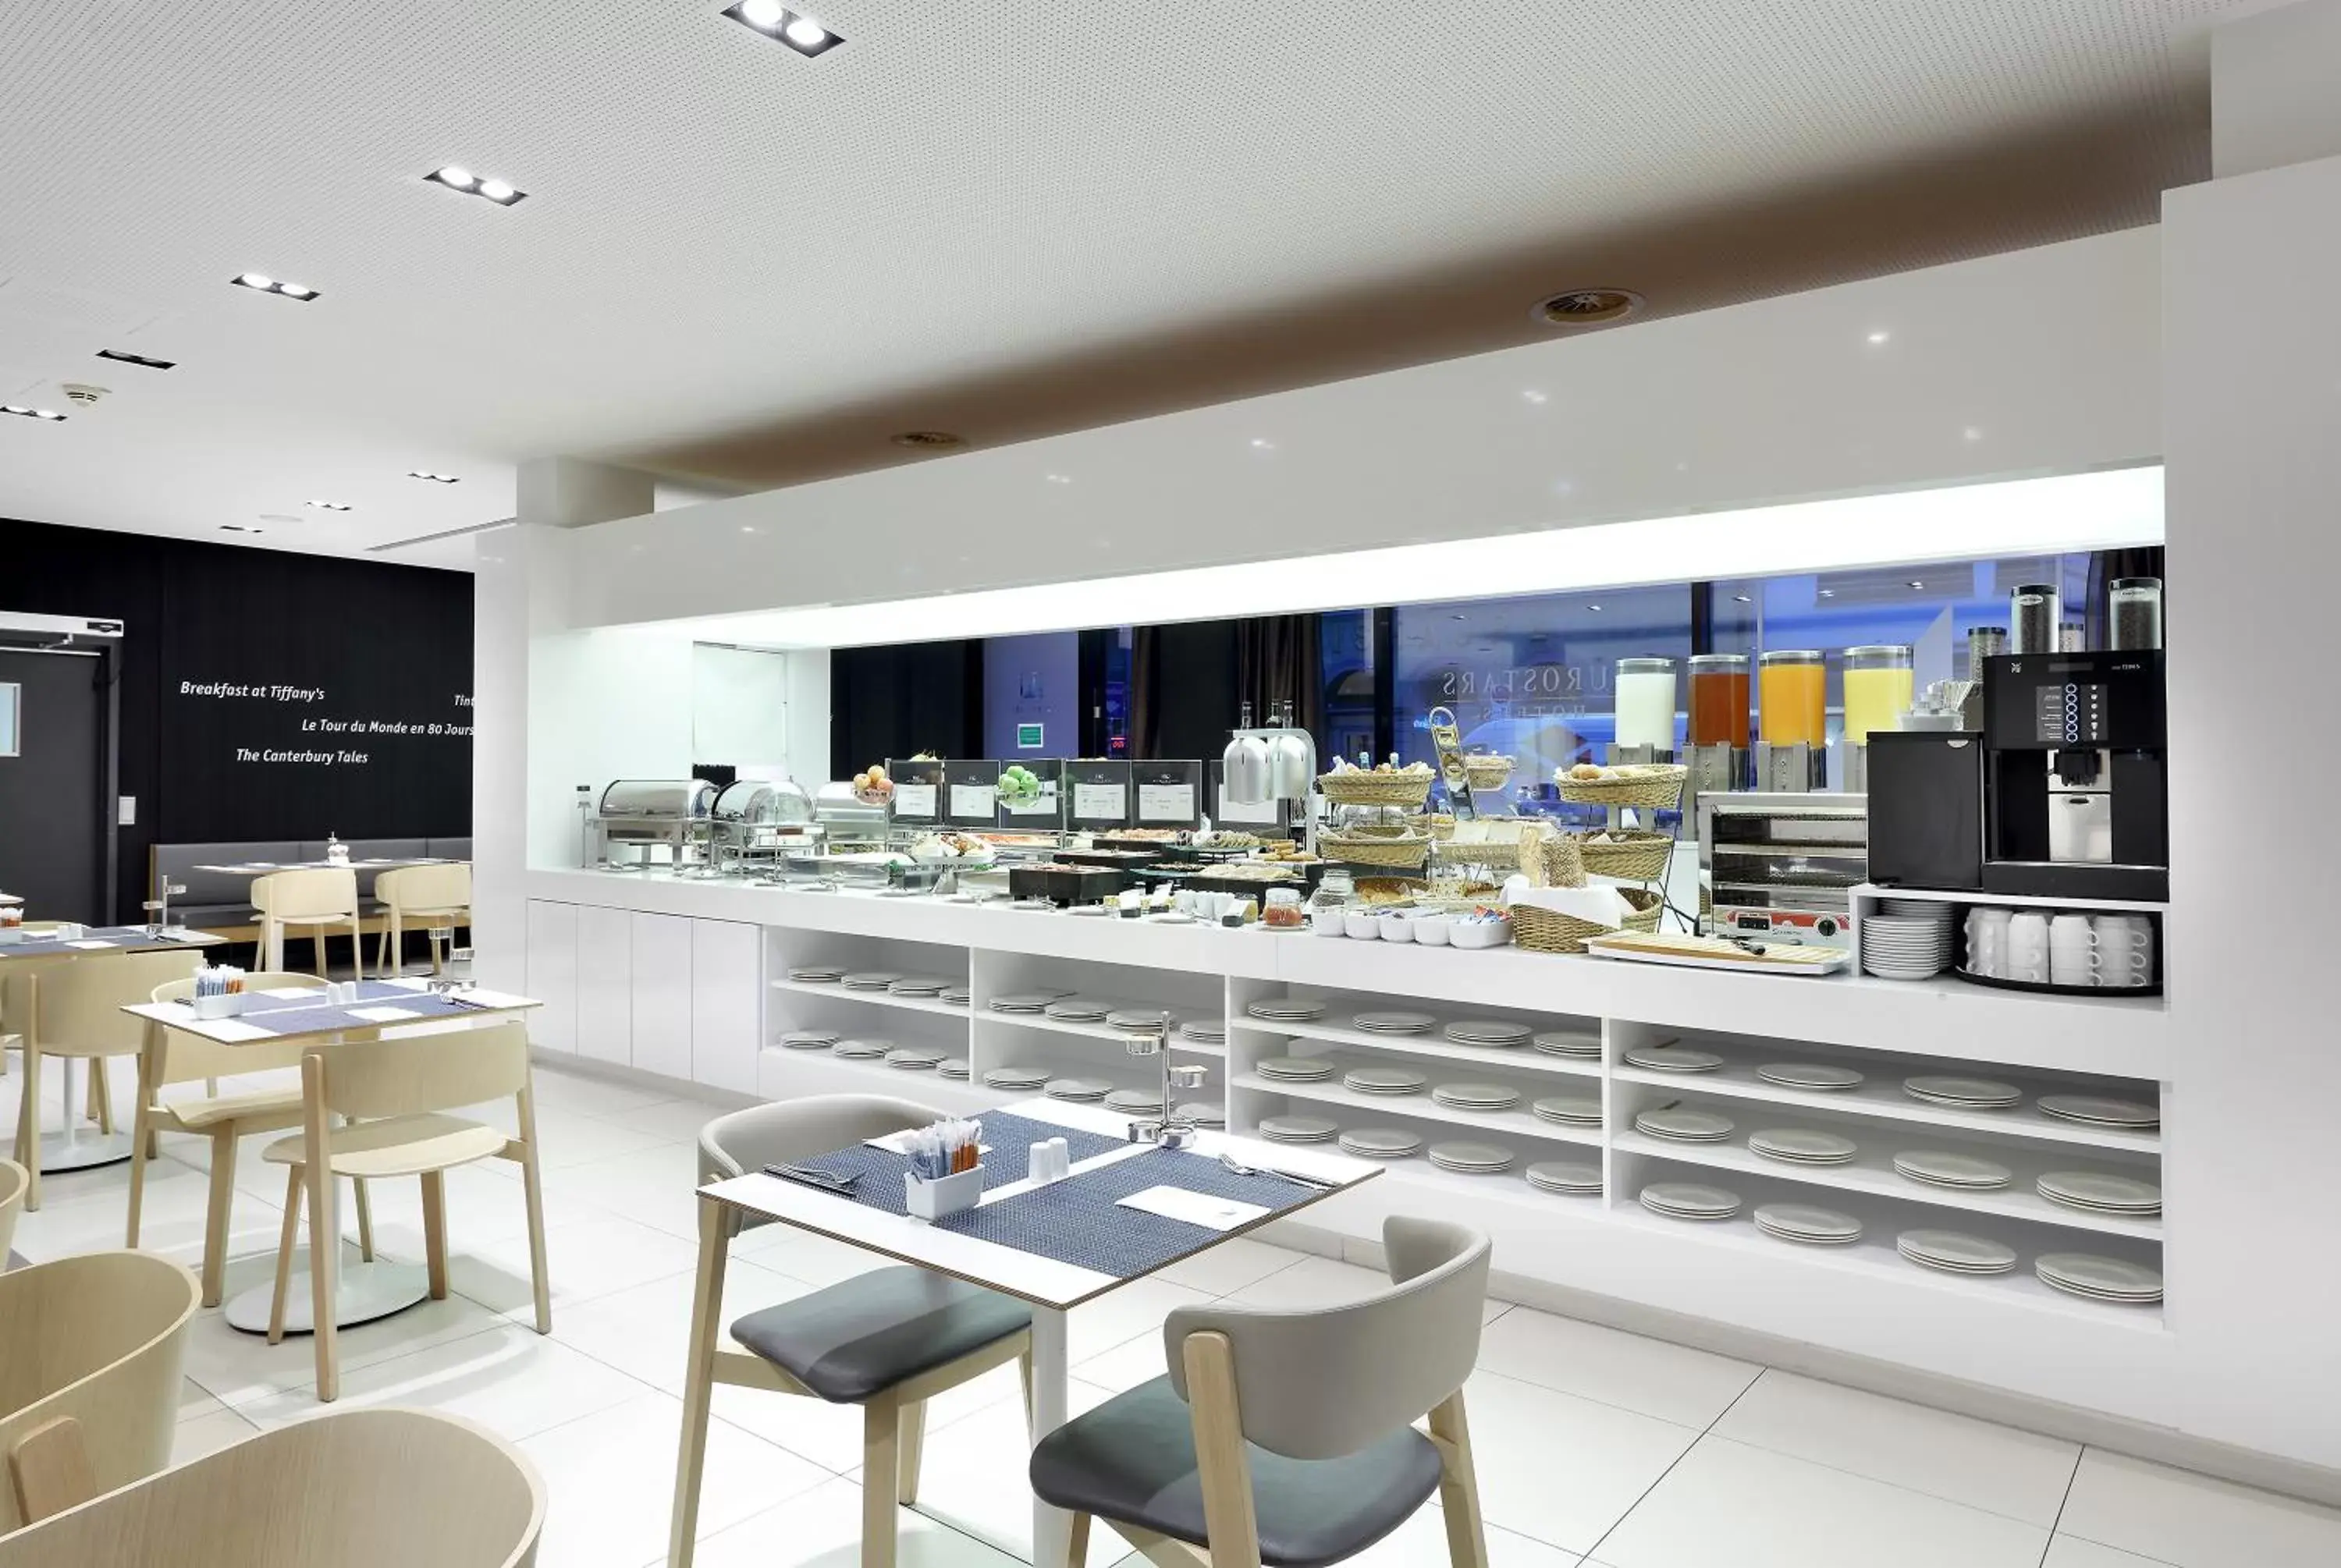 Buffet breakfast, Restaurant/Places to Eat in Eurostars Book Hotel